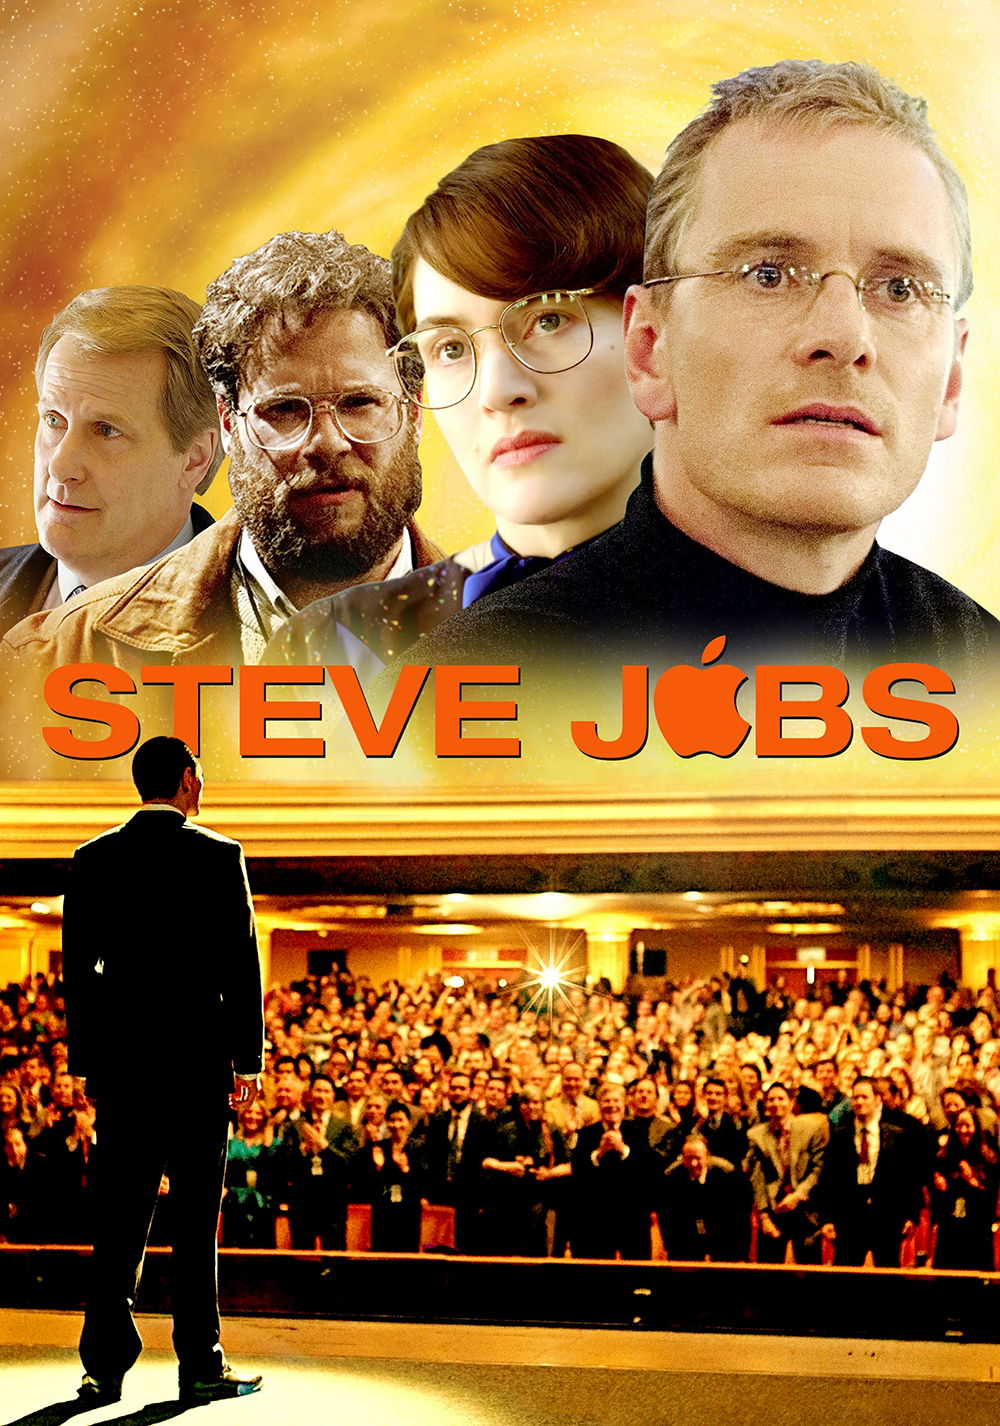 jobs movie poster